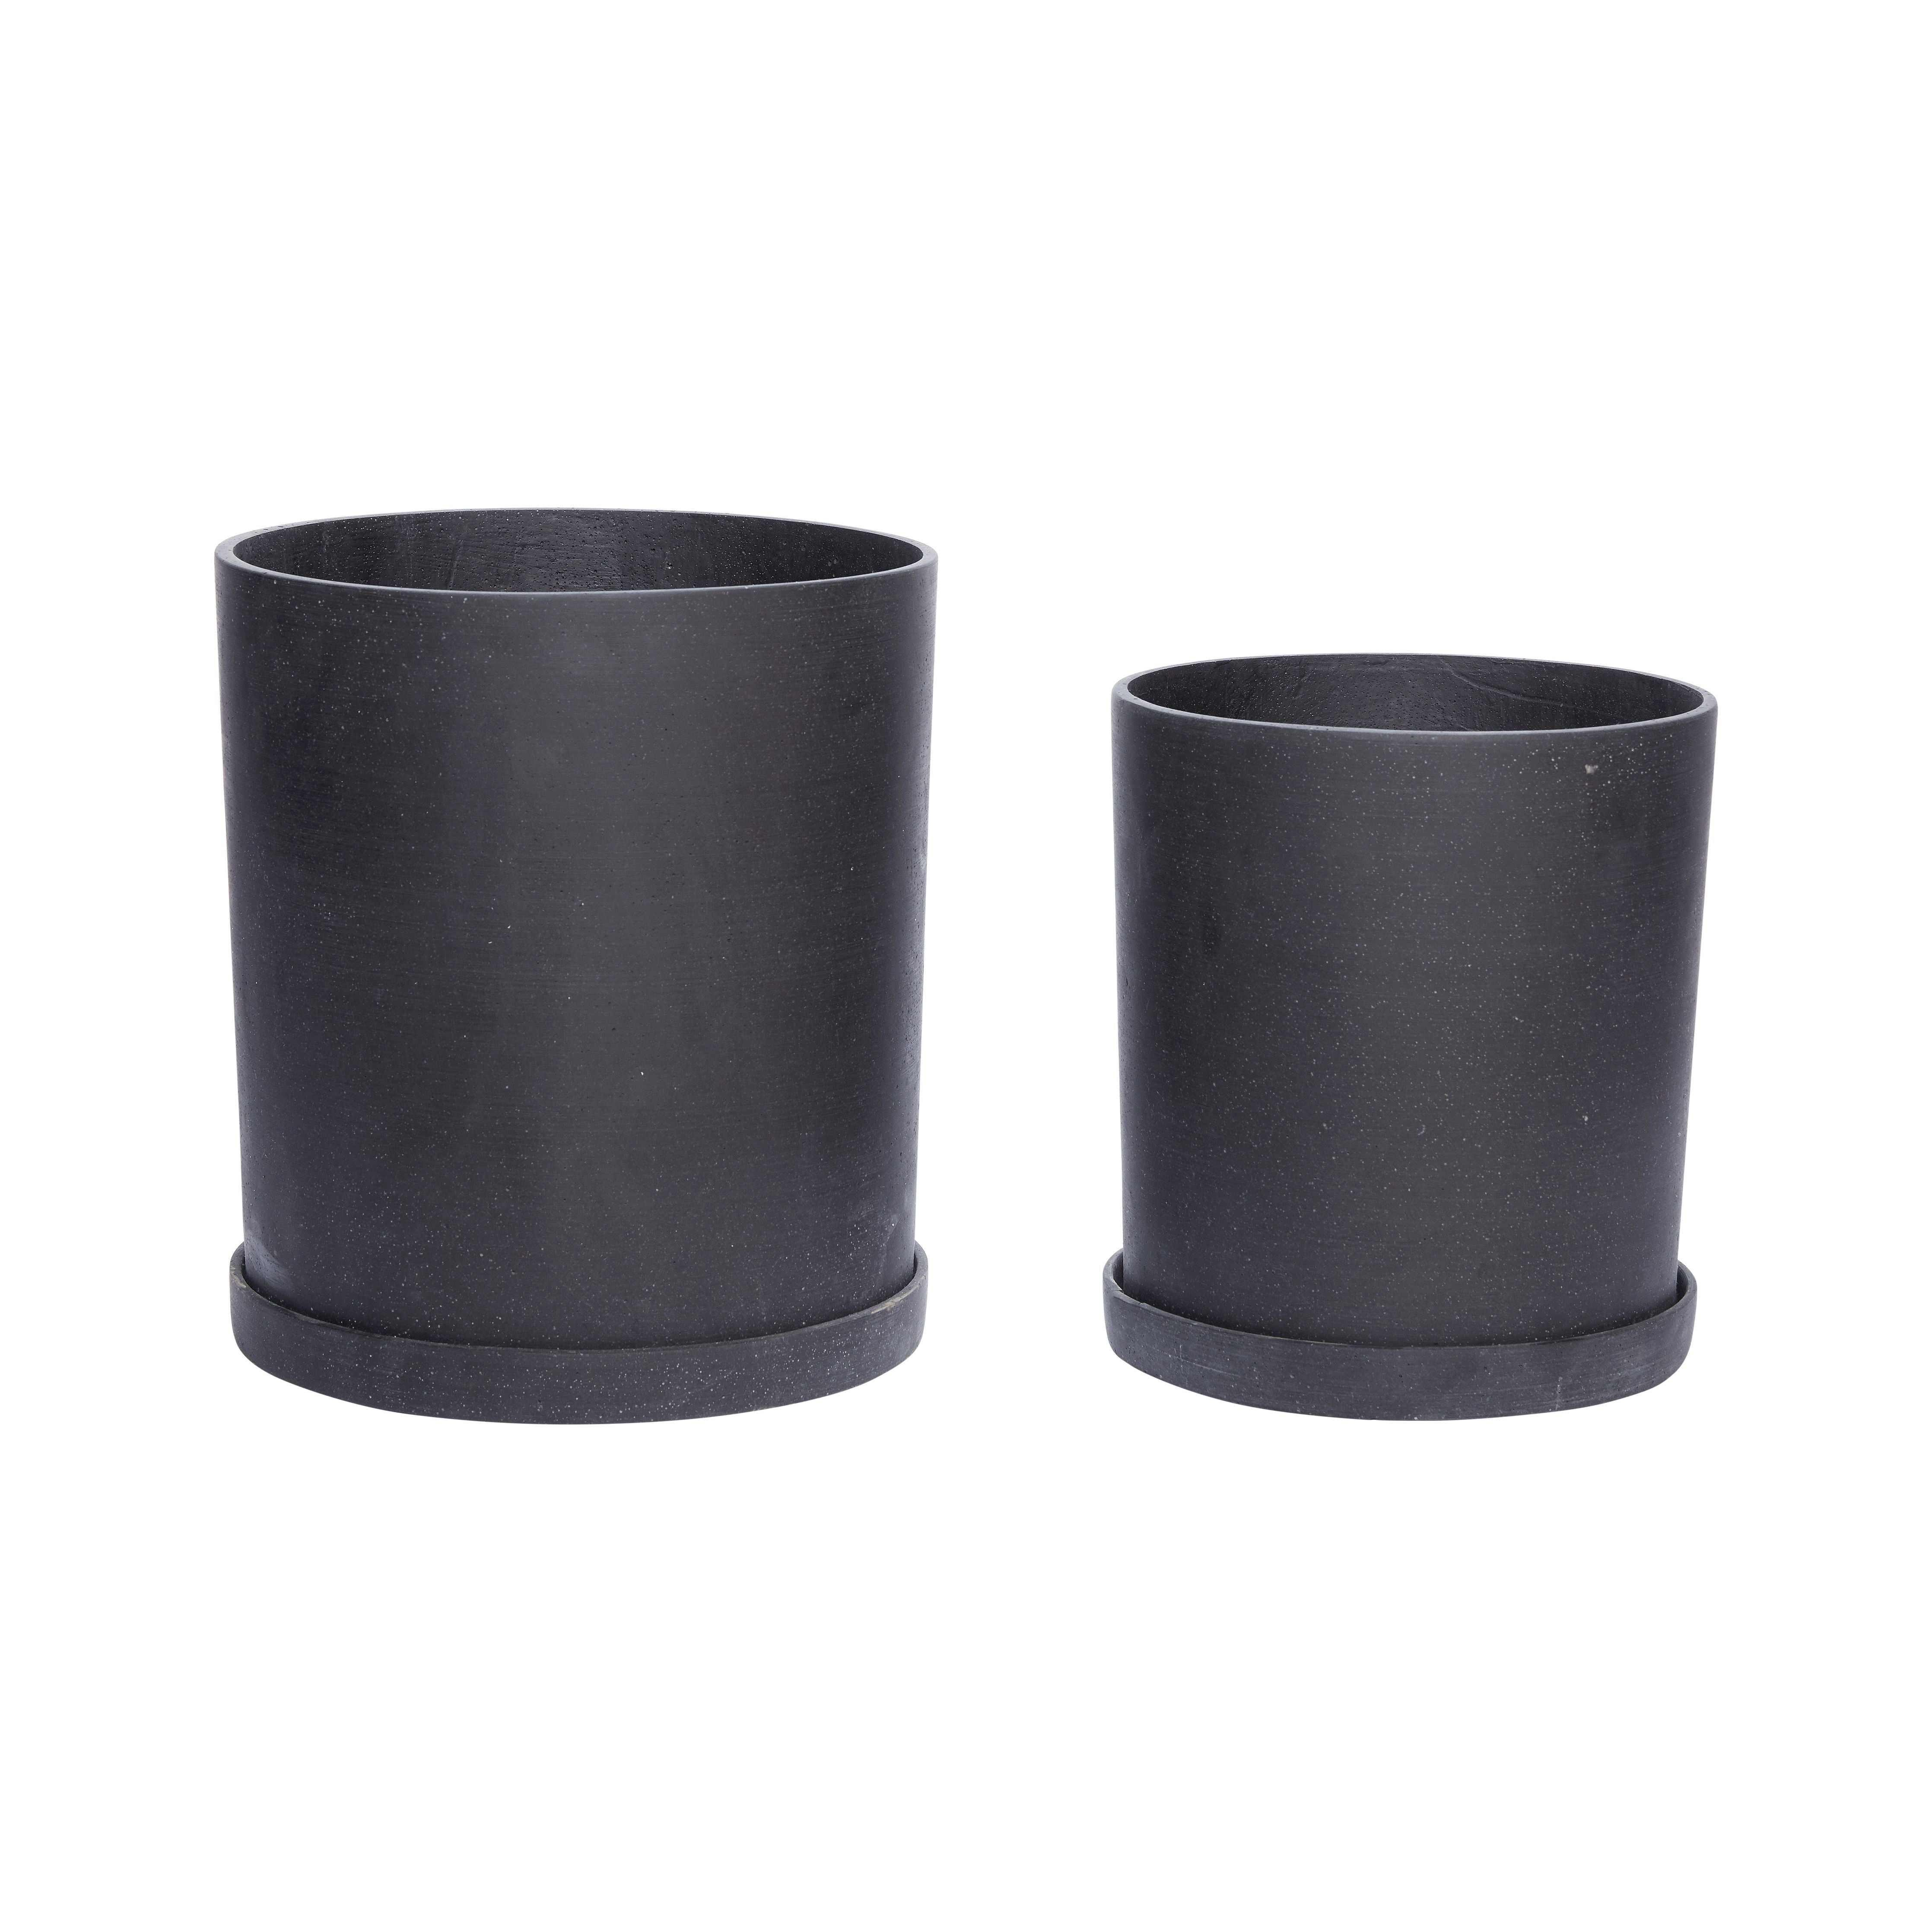 Hübsch Podium Pots Medium Set Of 2, Black